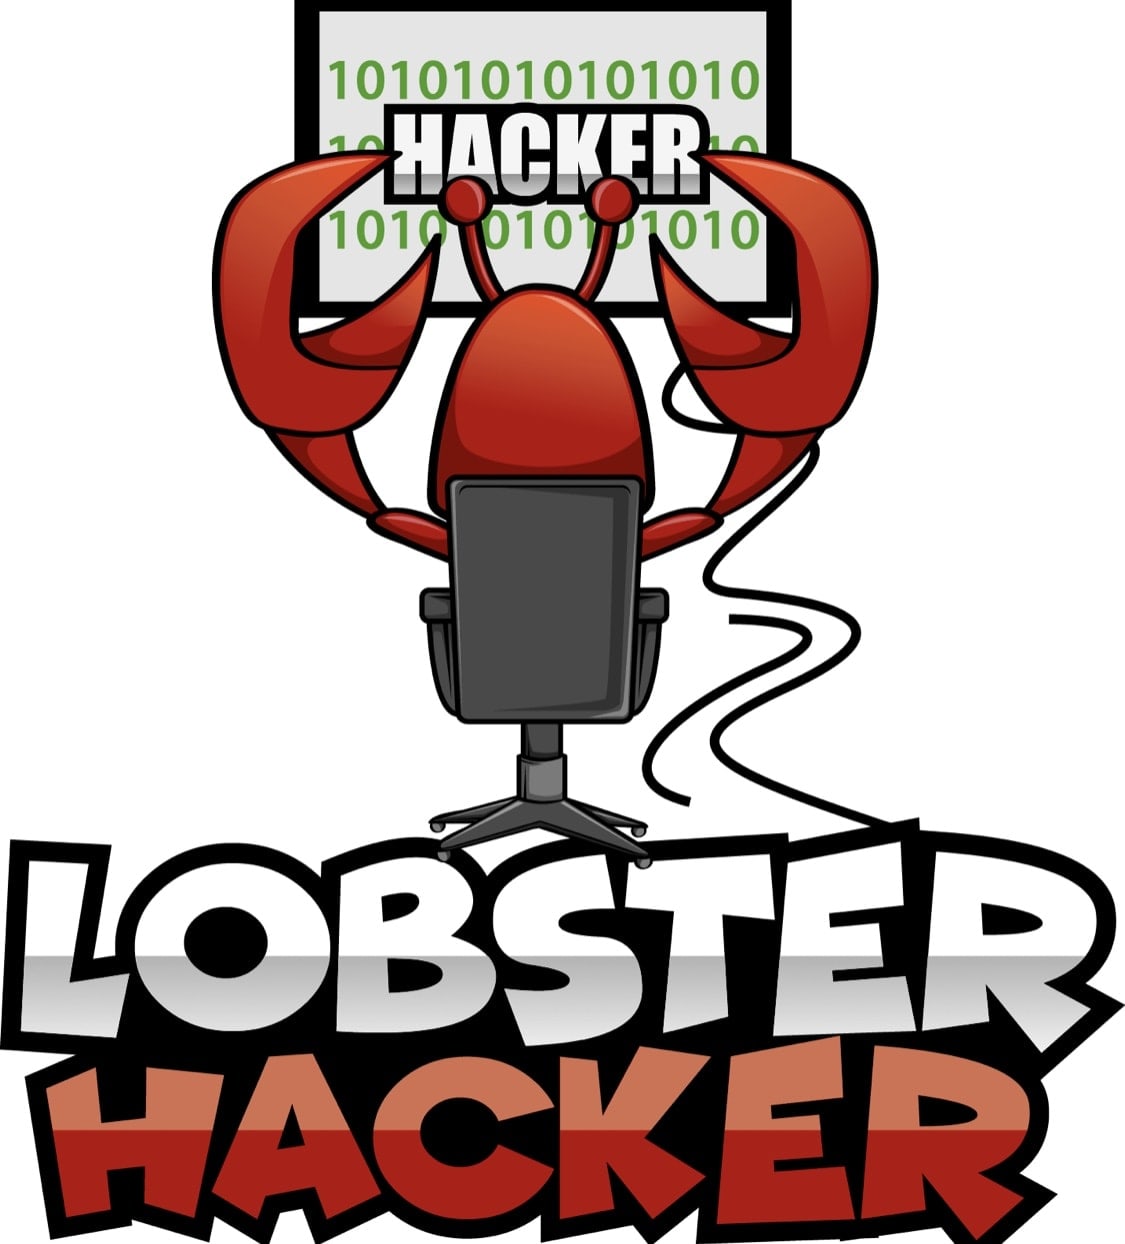 Lobsterhacker